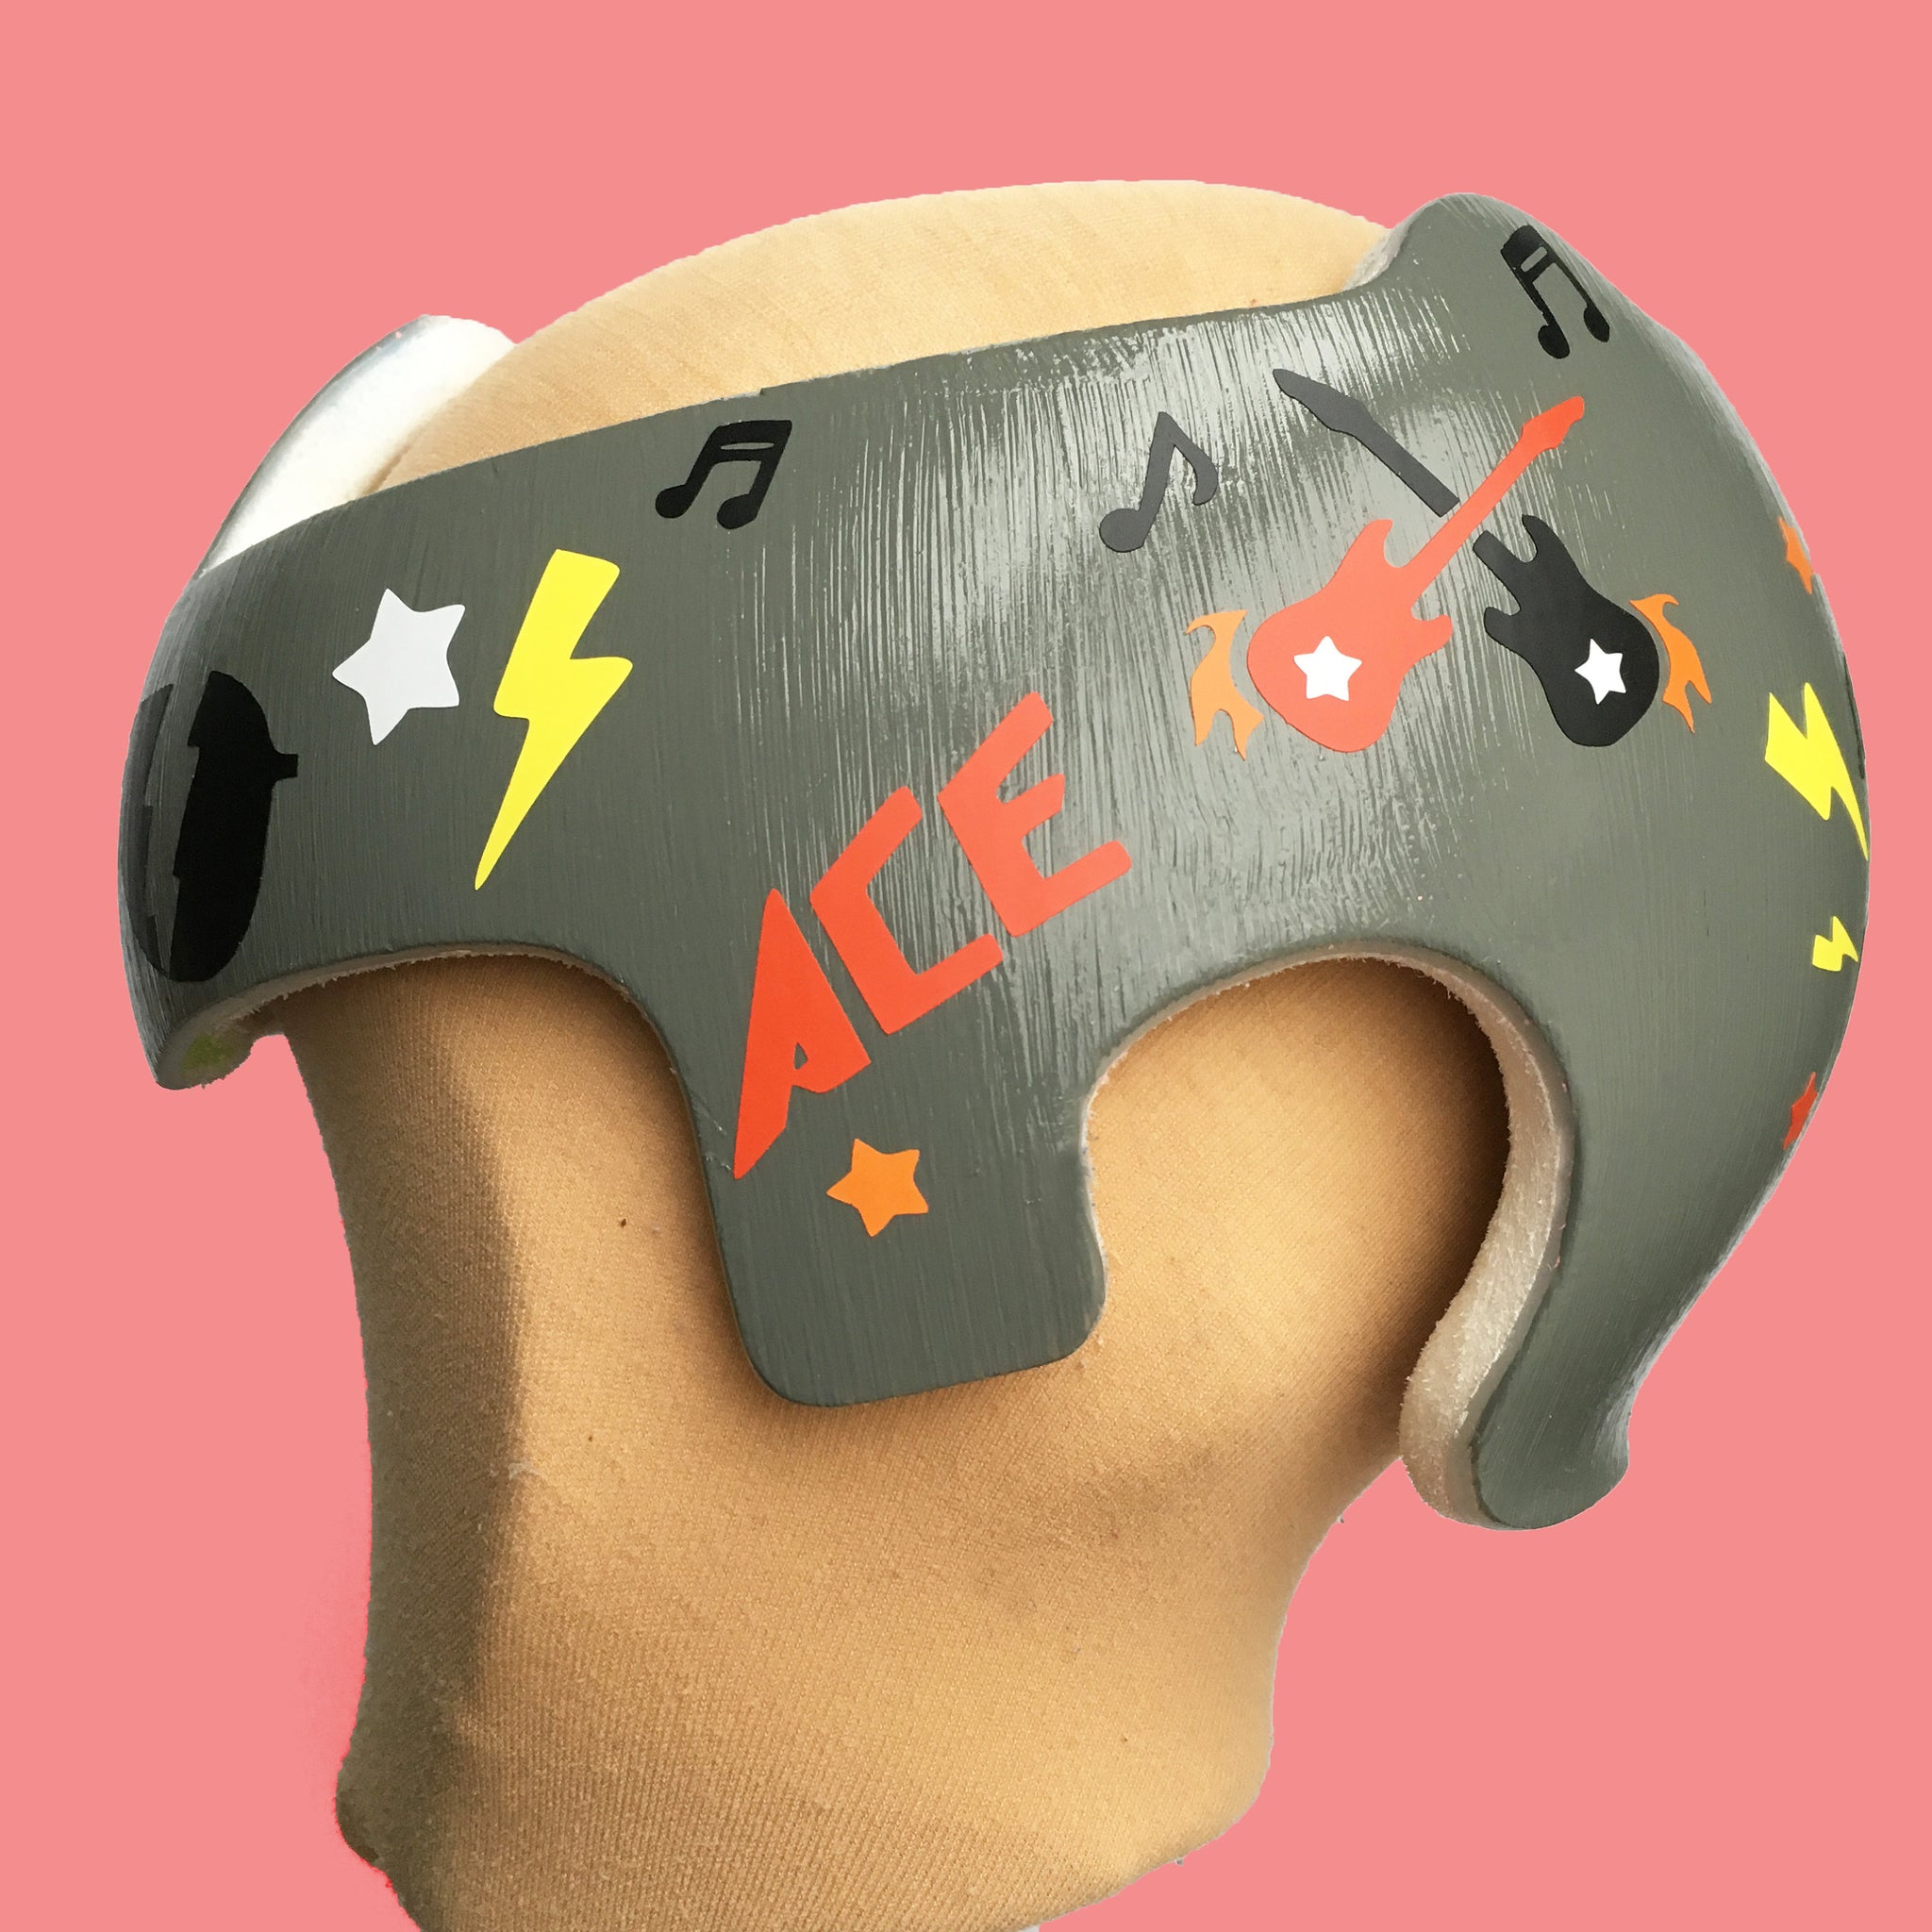 Cranial Helmet Band Decal Sticker Accessories Boys Master Builder Blocks